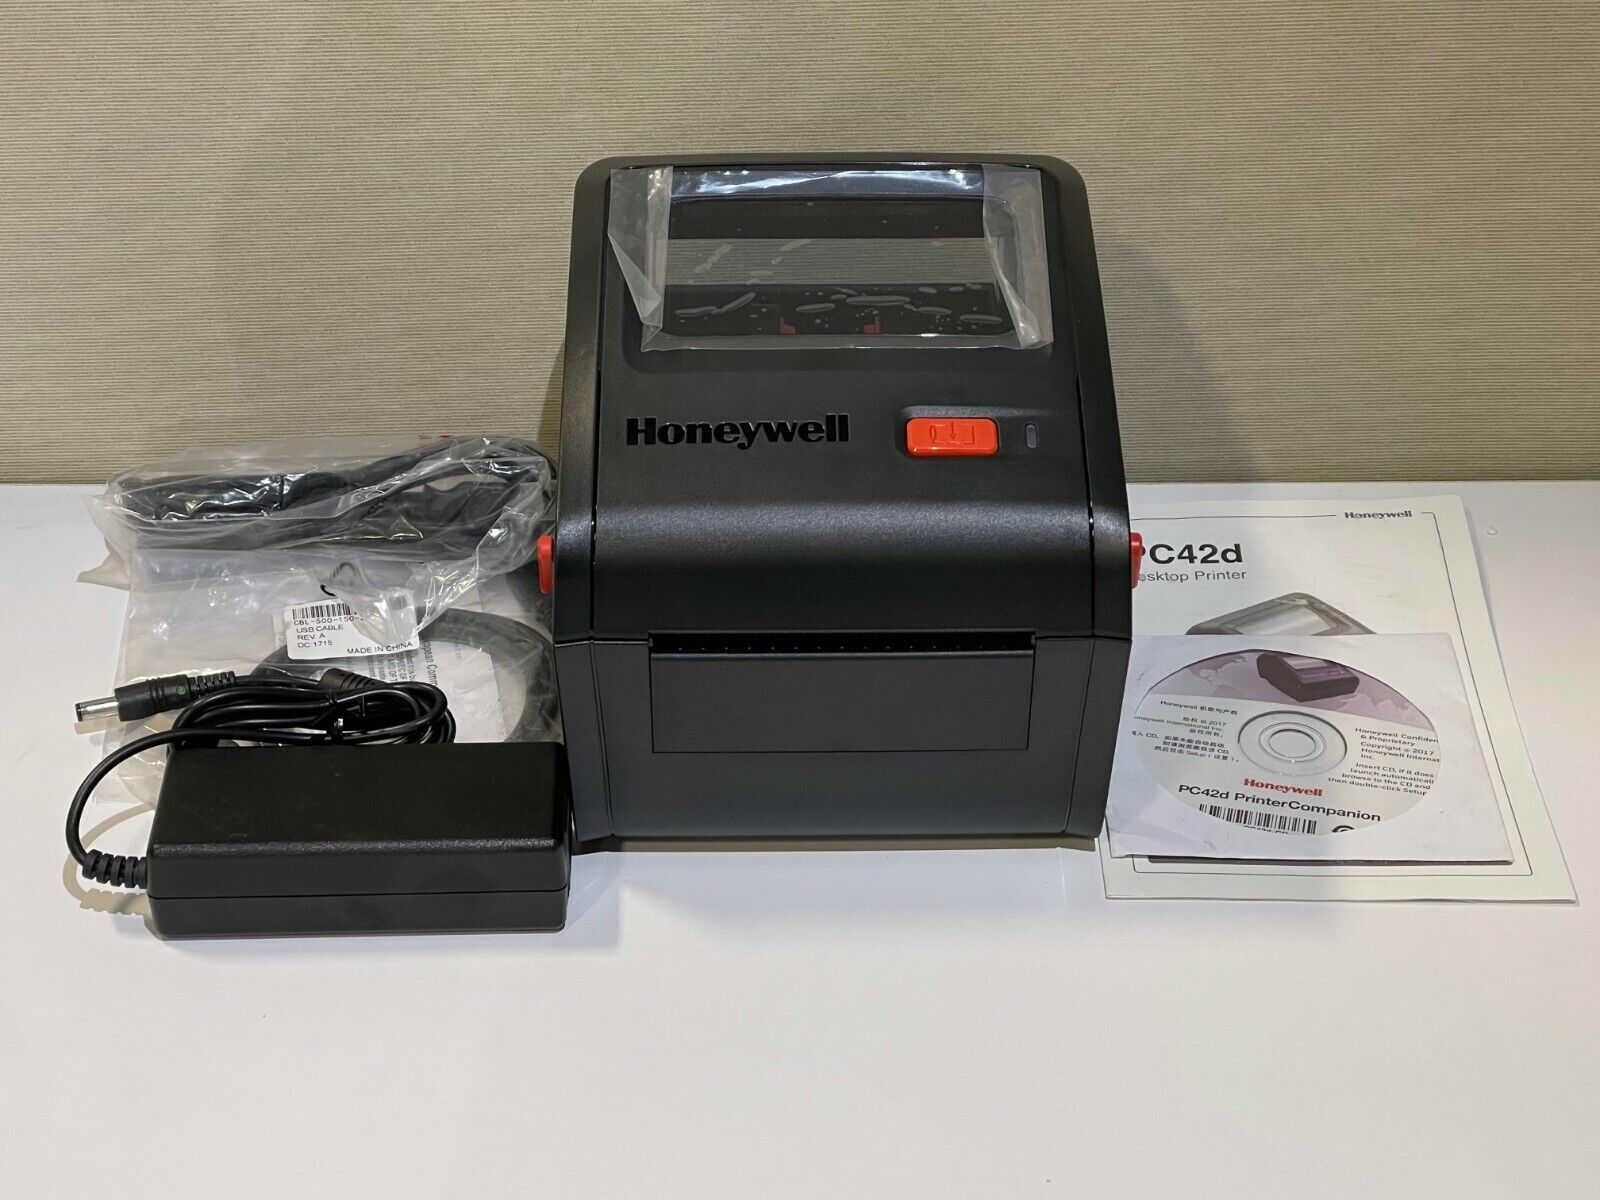 Honeywell PC42d Thermal Printer